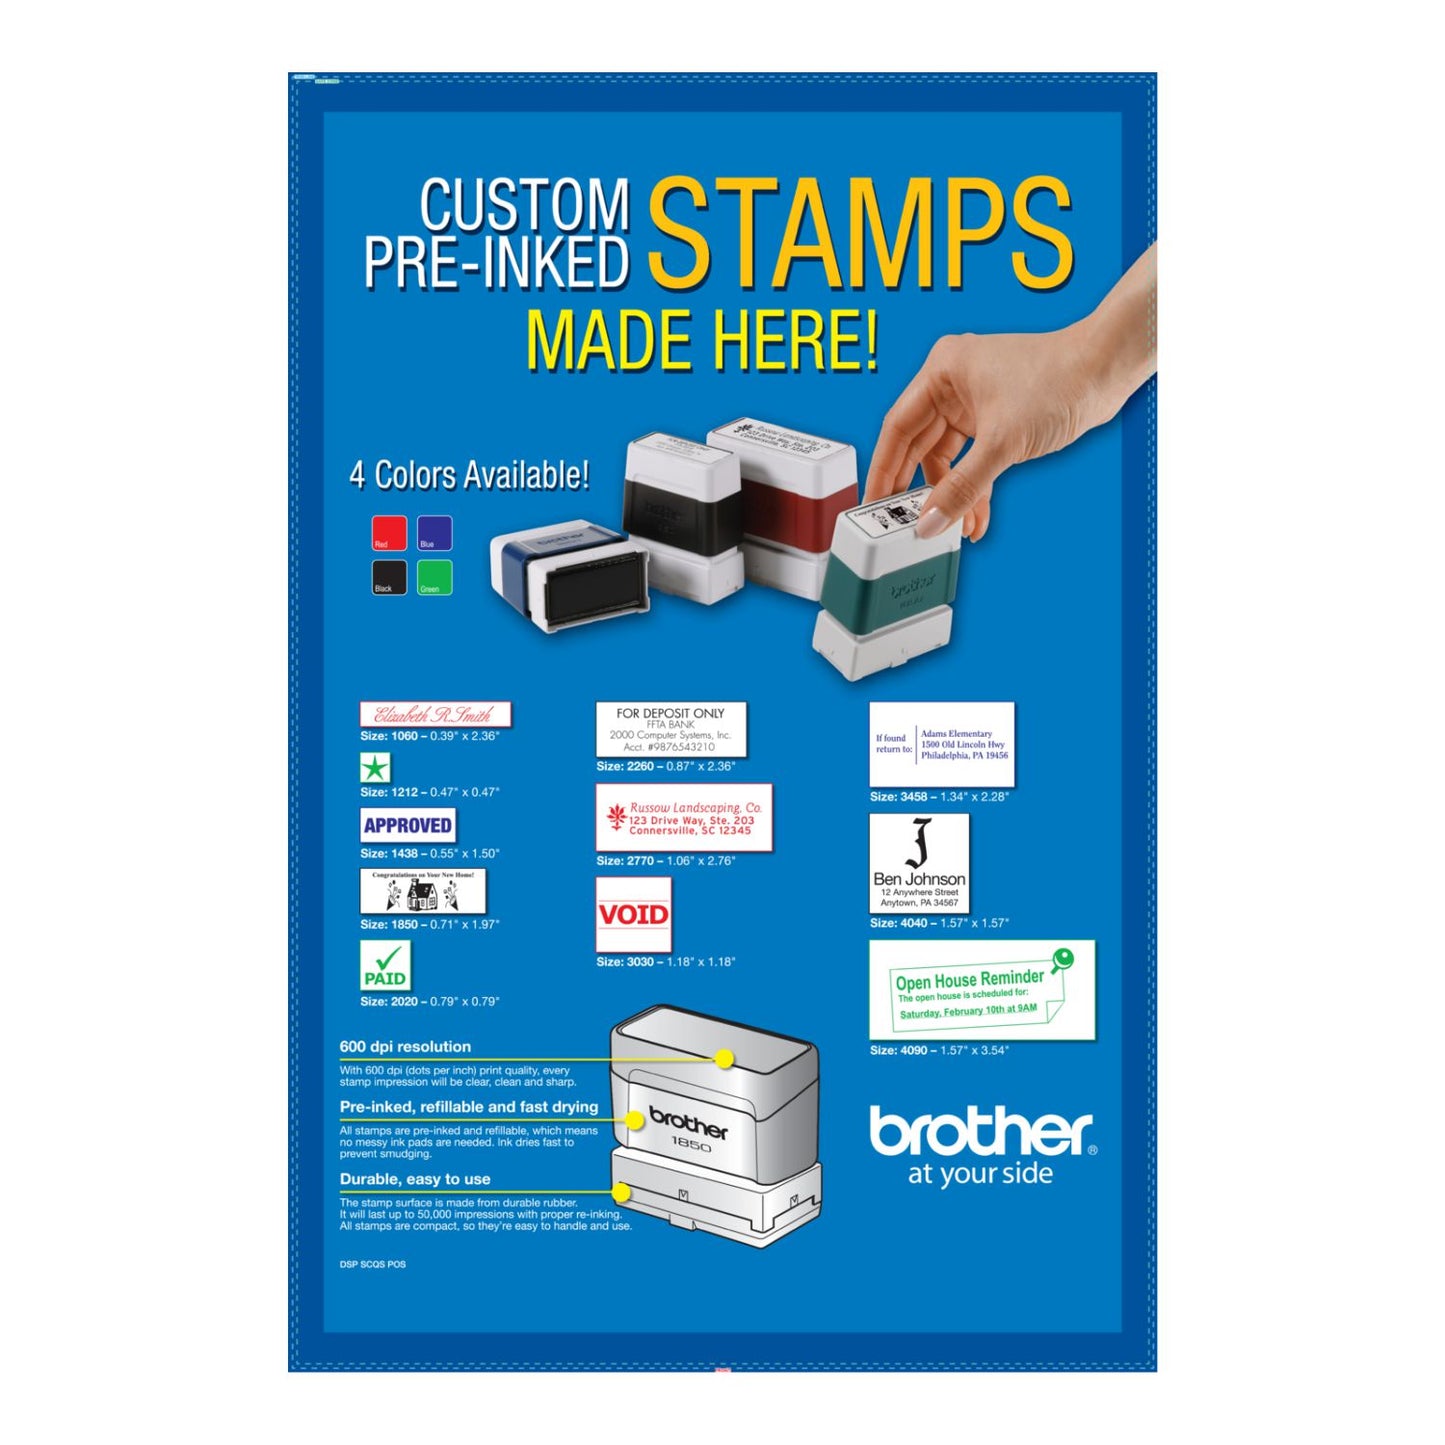 Stampcreator Stamp Poster - Rubber Stamp Materials